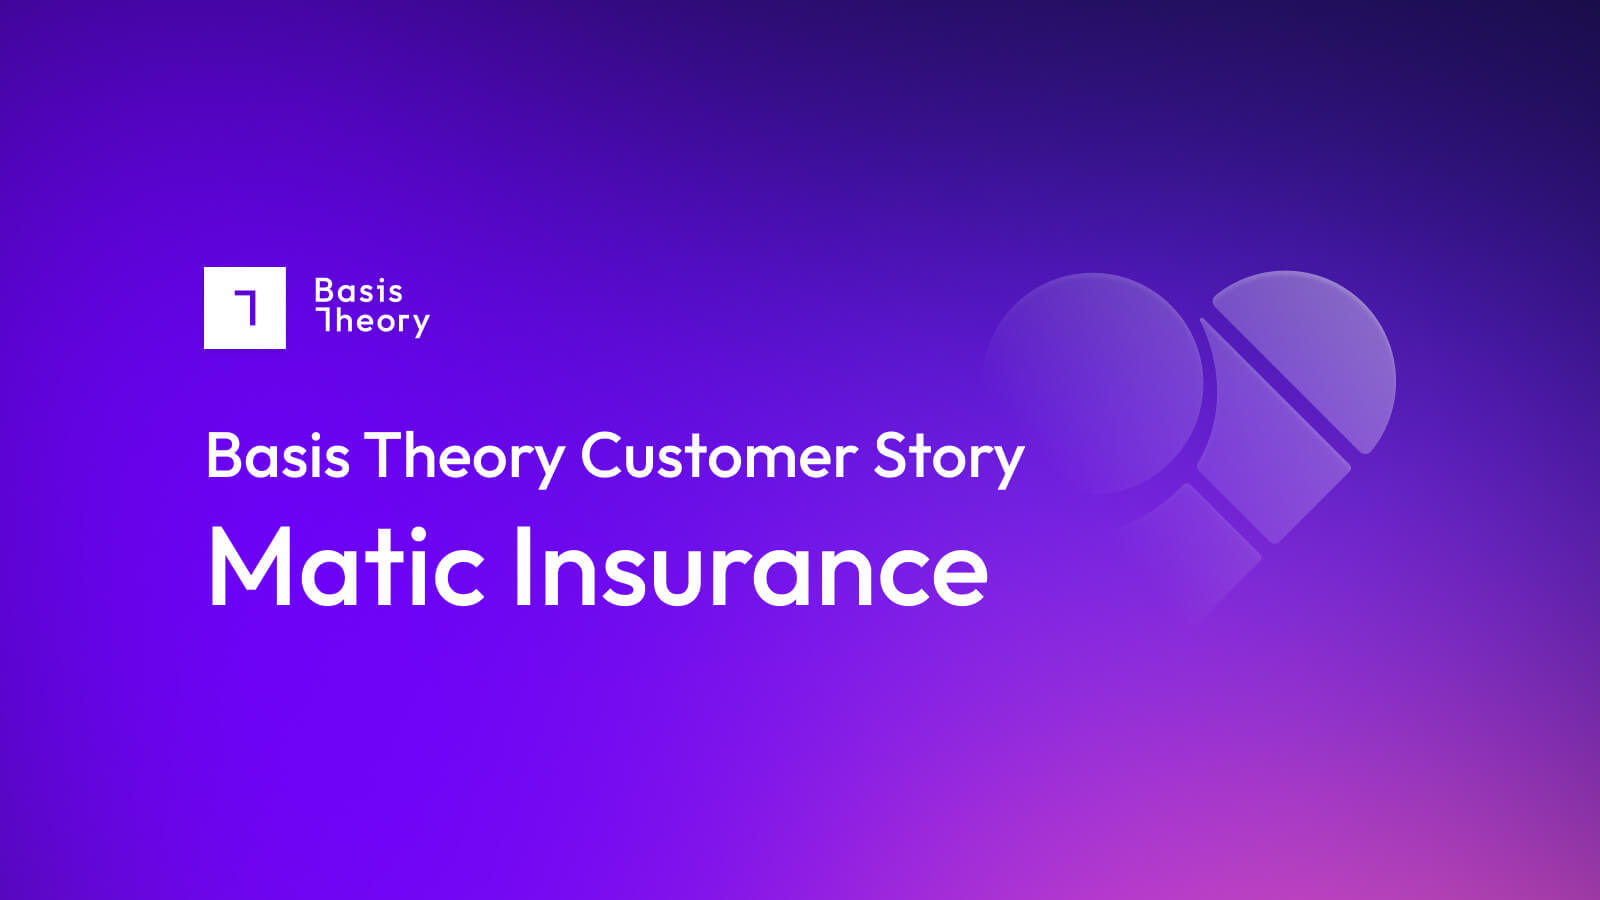 Matic Insurance customer story